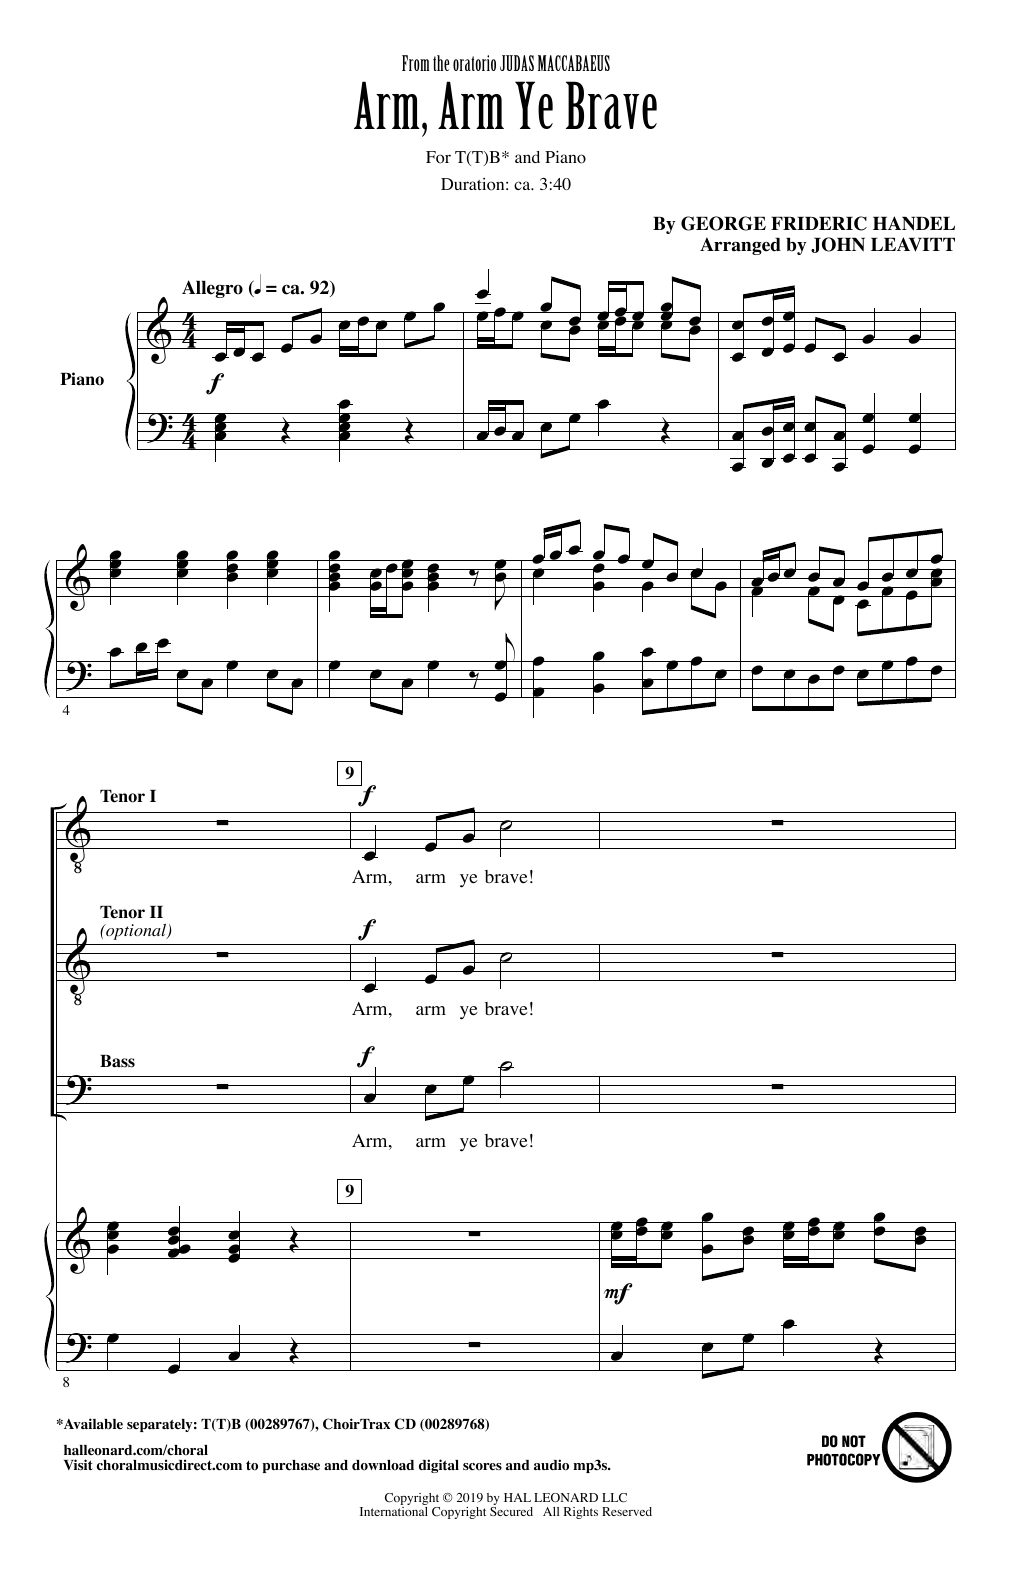 George Frideric Handel Arm, Arm Ye Brave (arr. John Leavitt) Sheet Music Notes & Chords for Choir - Download or Print PDF